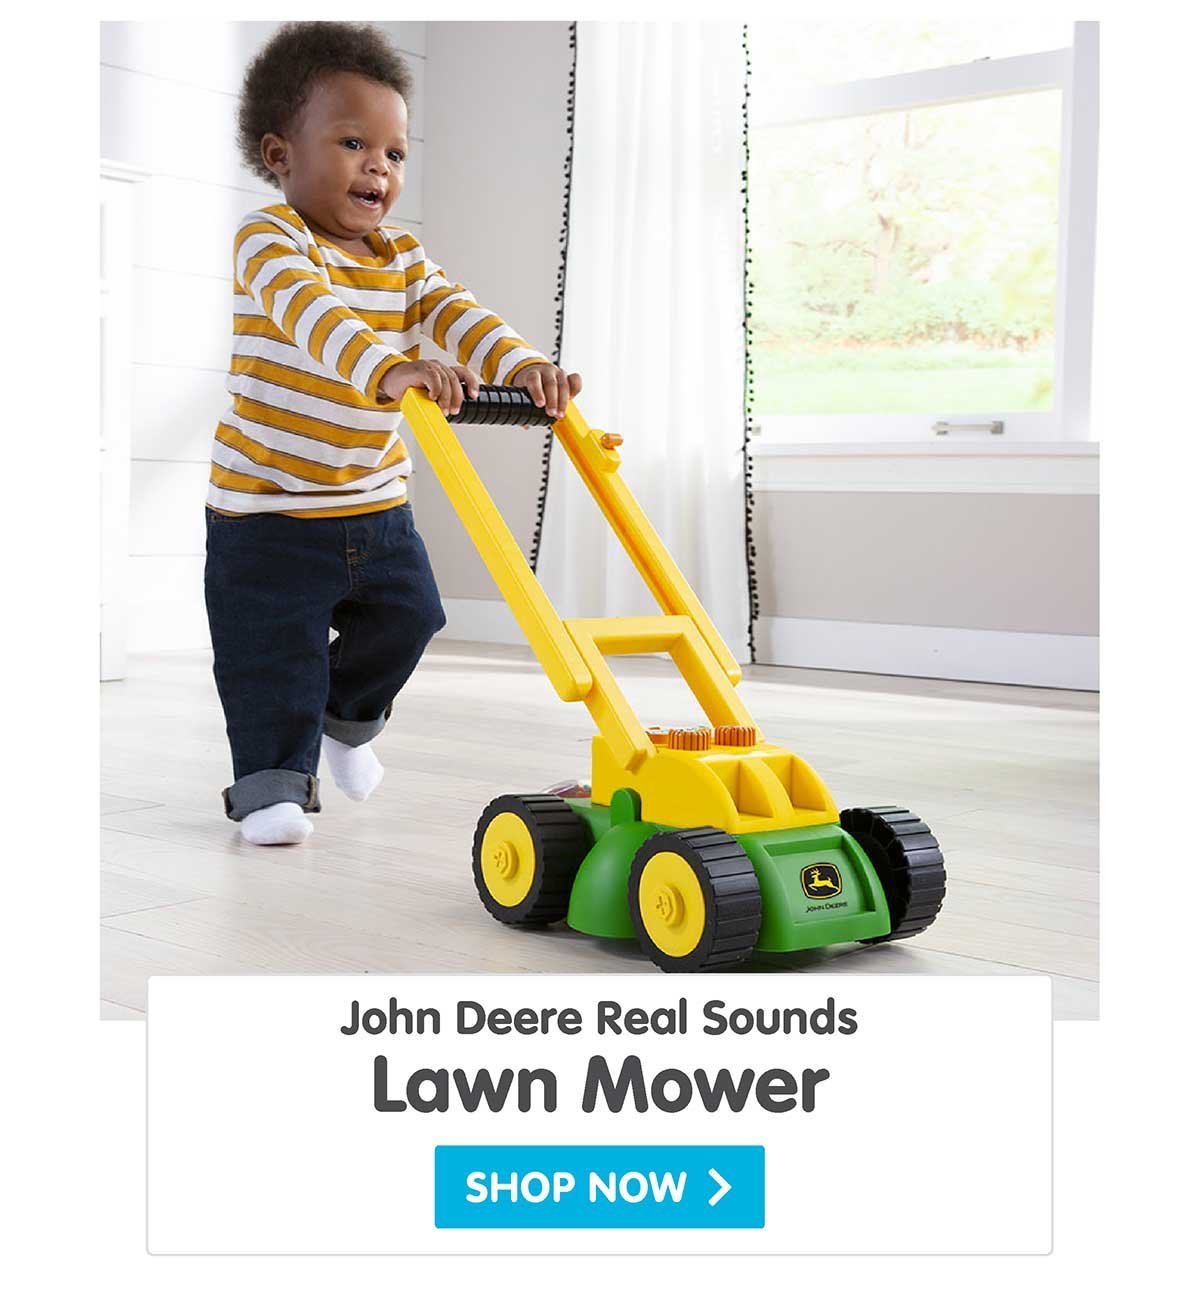 John Deere Real Sounds Lawn Mower